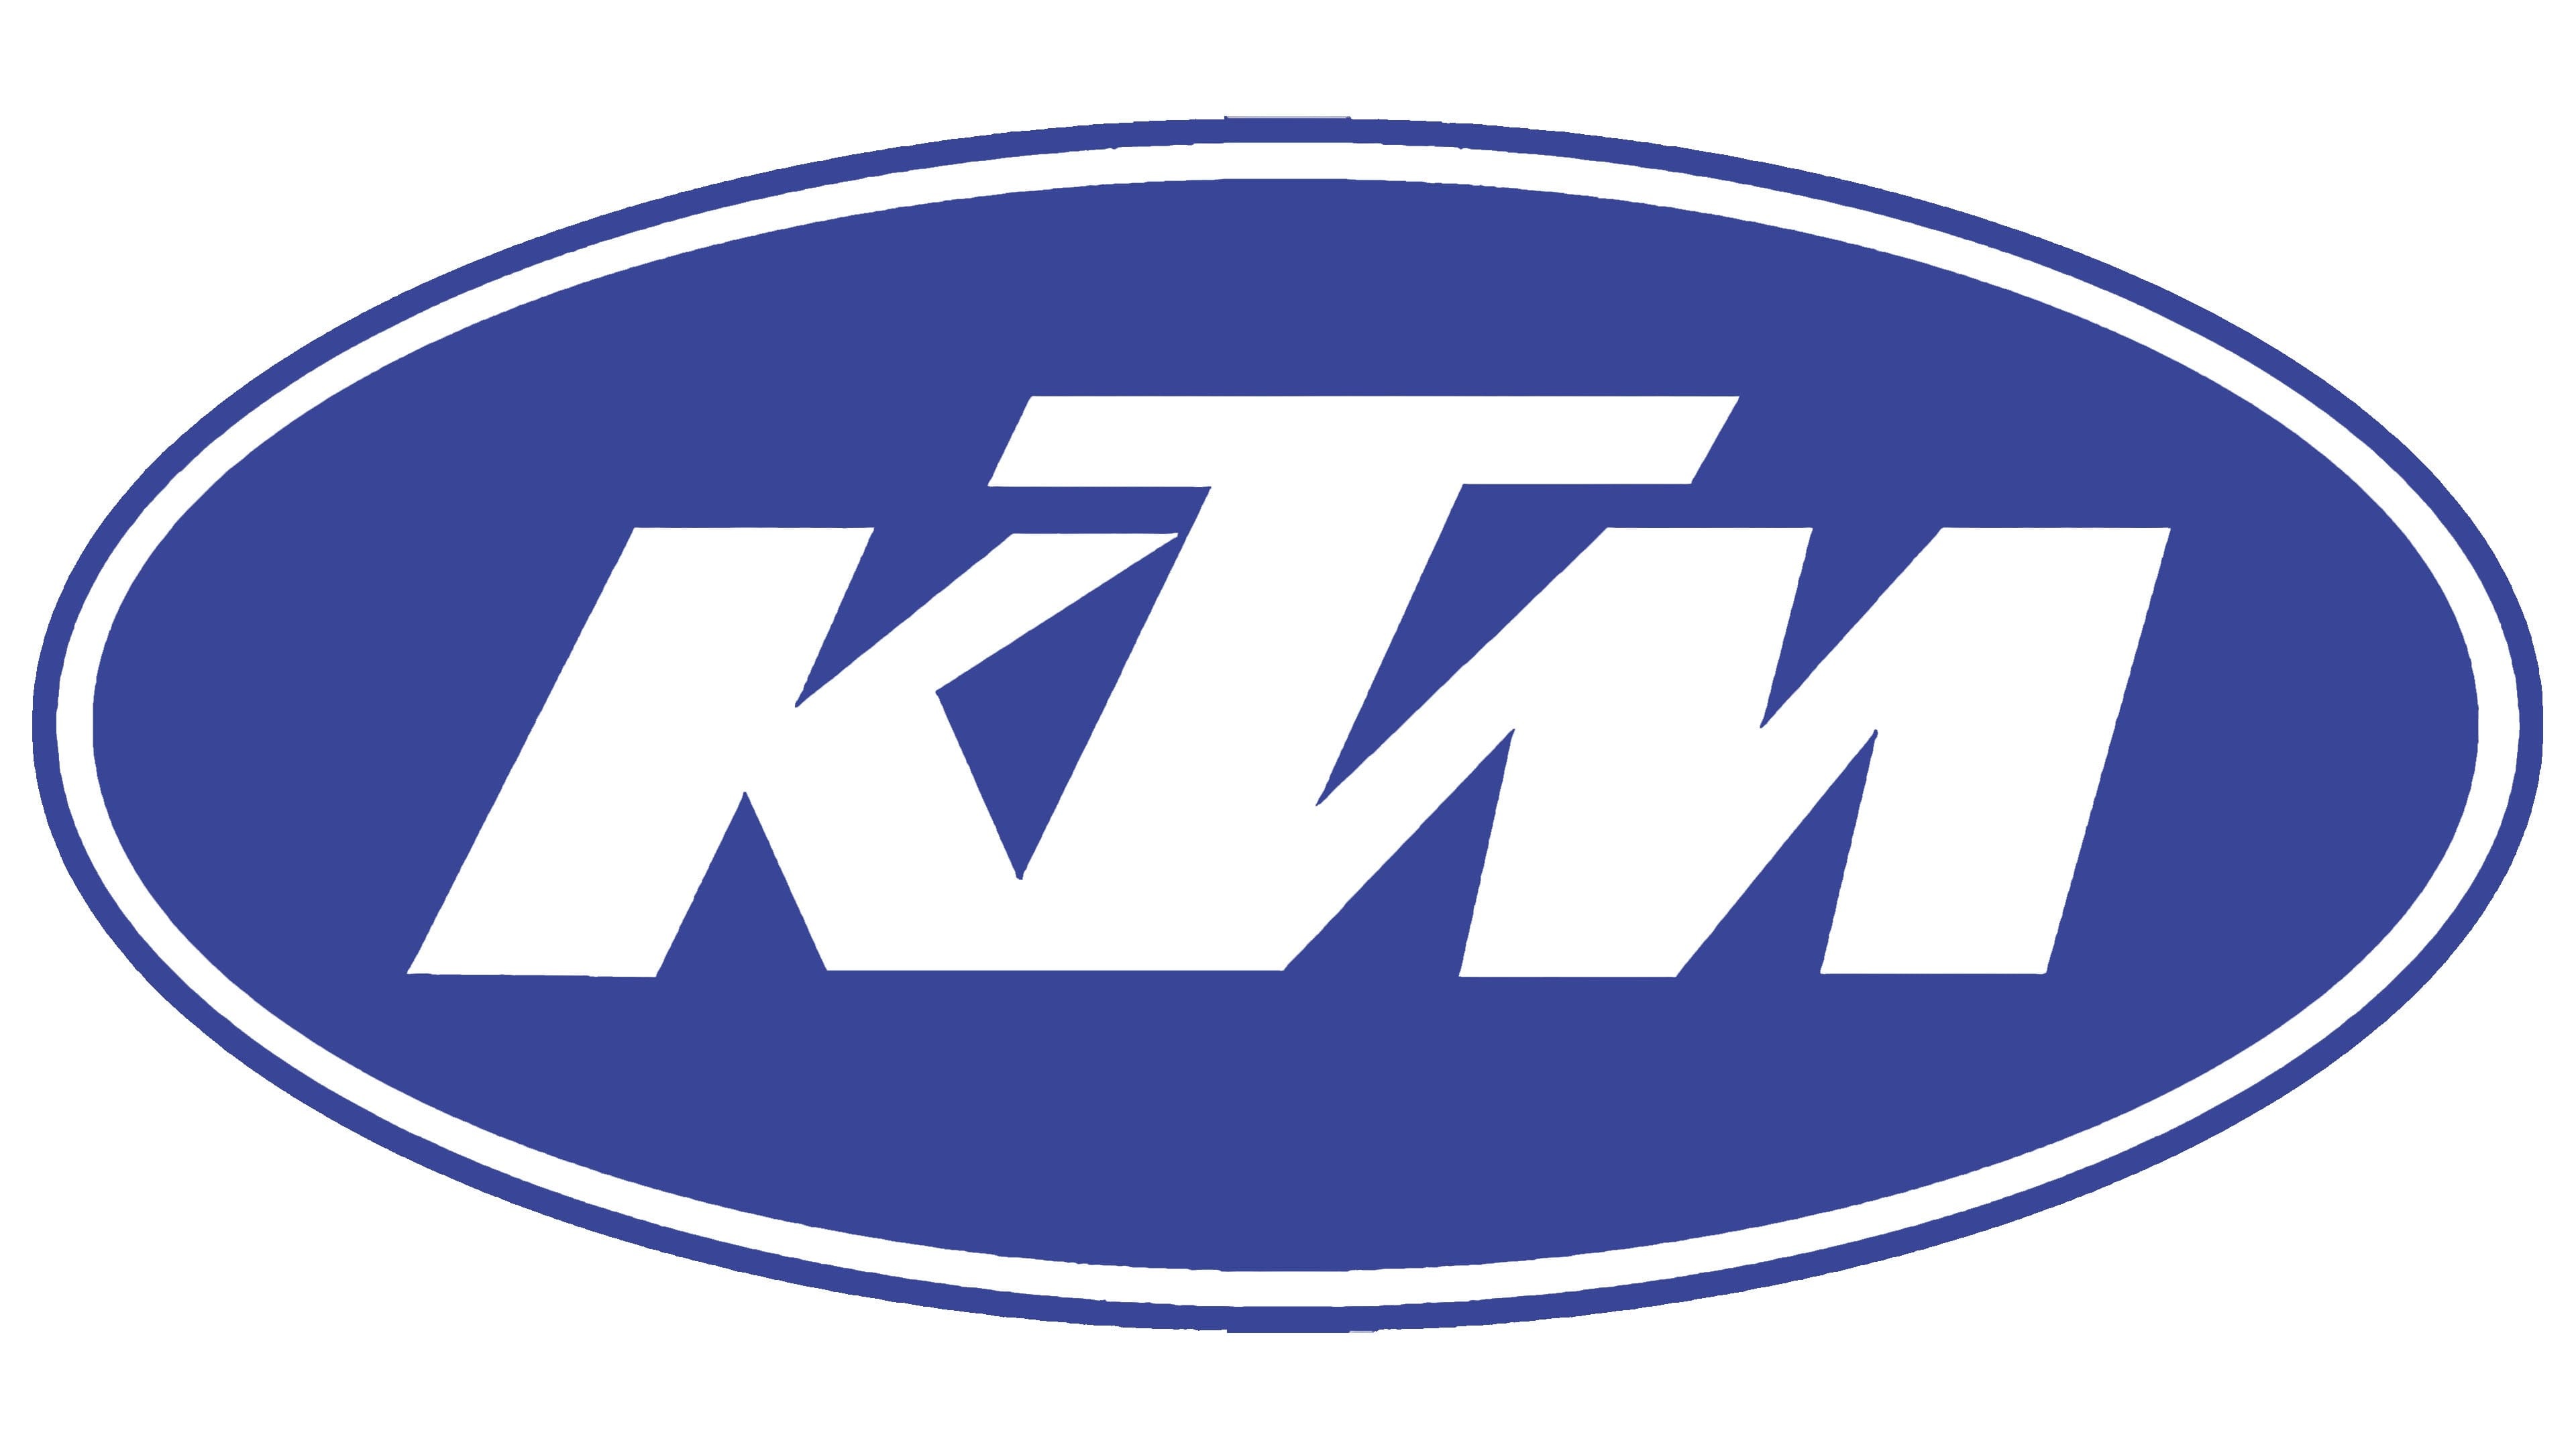 Ktm logo Vectors & Illustrations for Free Download | Freepik